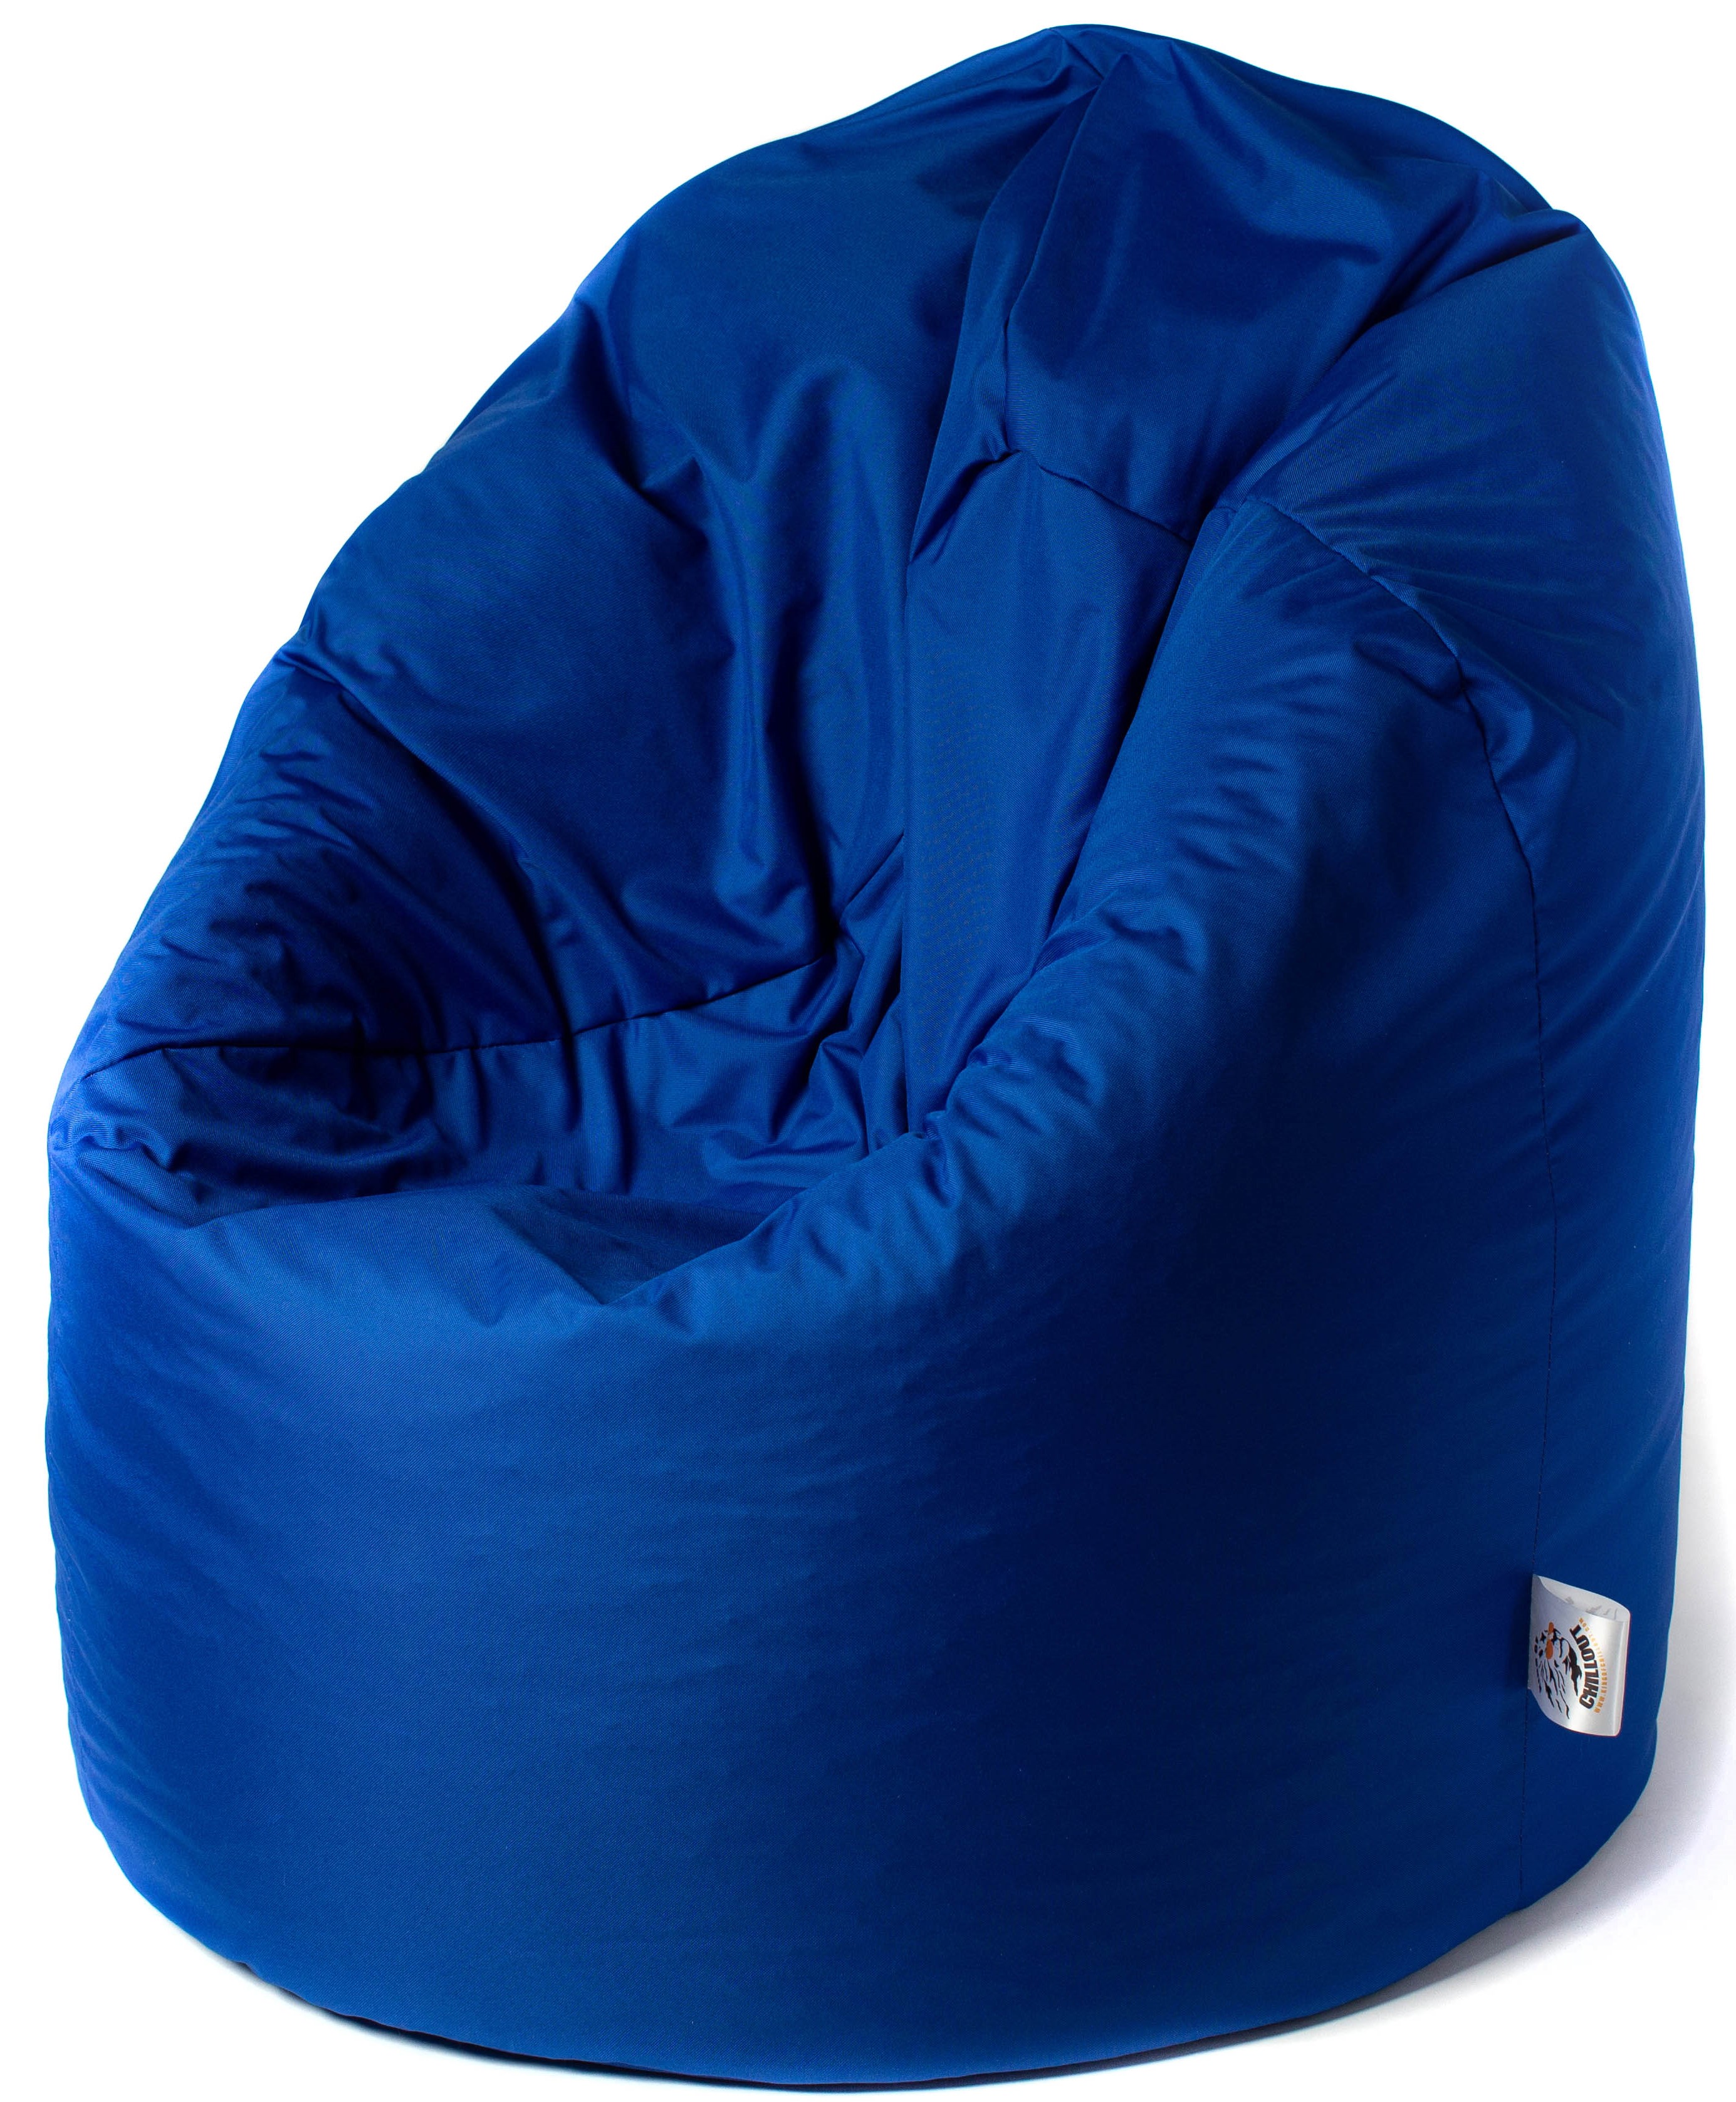 Bag Bean Sitzsack Sitzkissen in XL Sessel